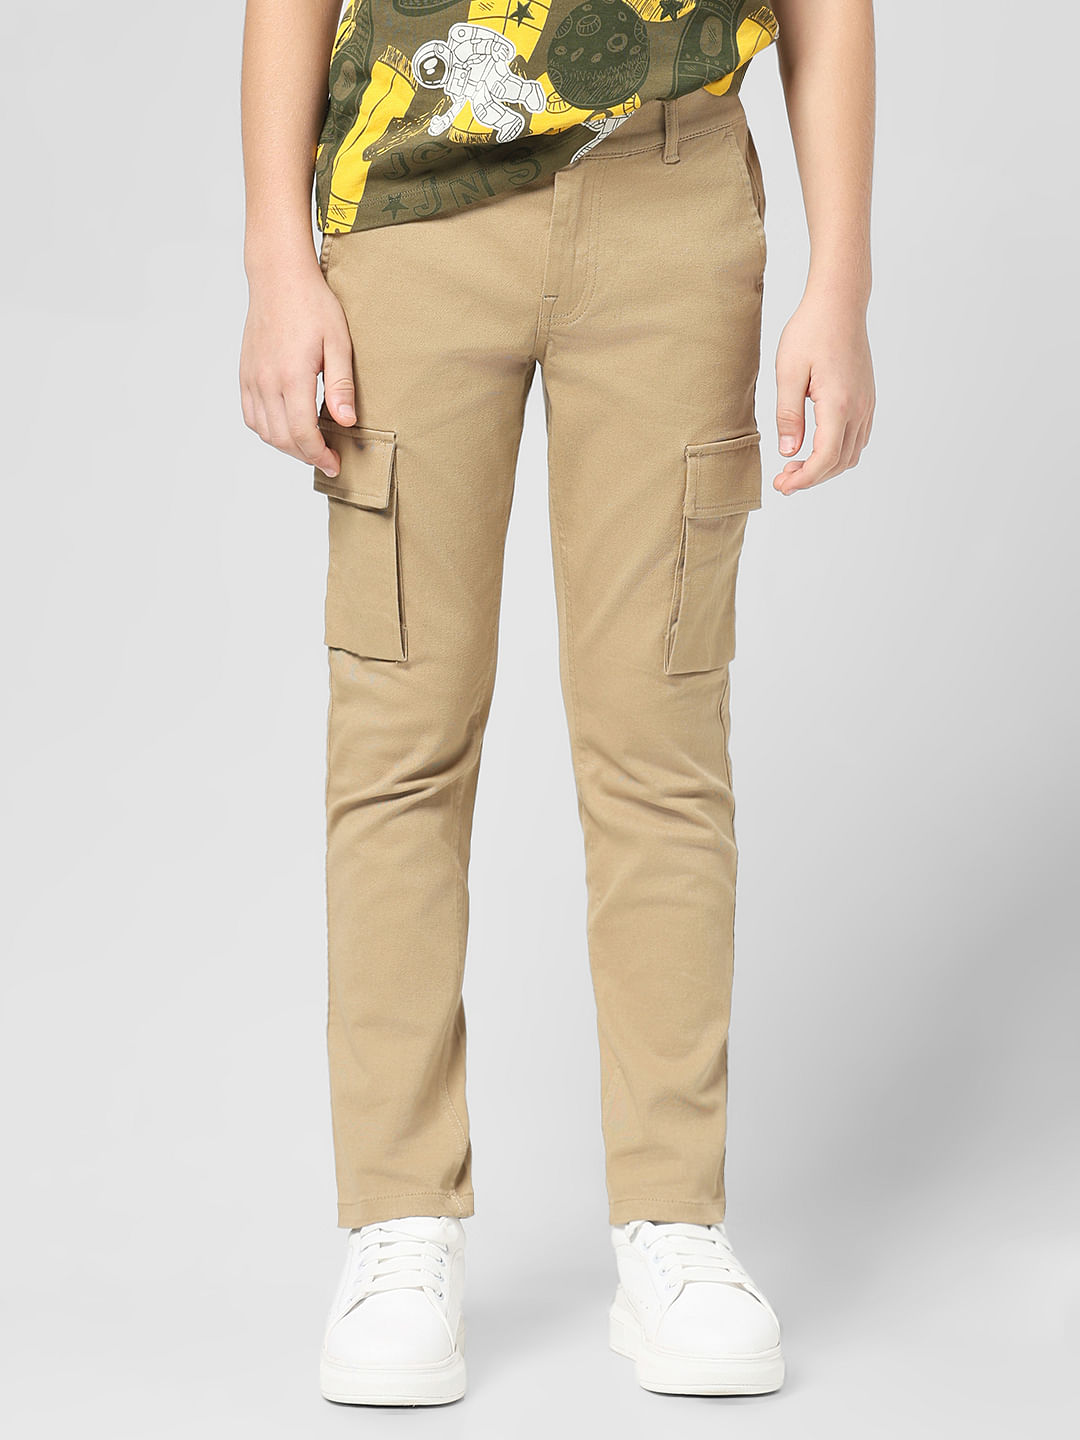 Buy U.S. Polo Assn. Kids Boys Brown Cargo Pants - Trousers for Boys 449246  | Myntra